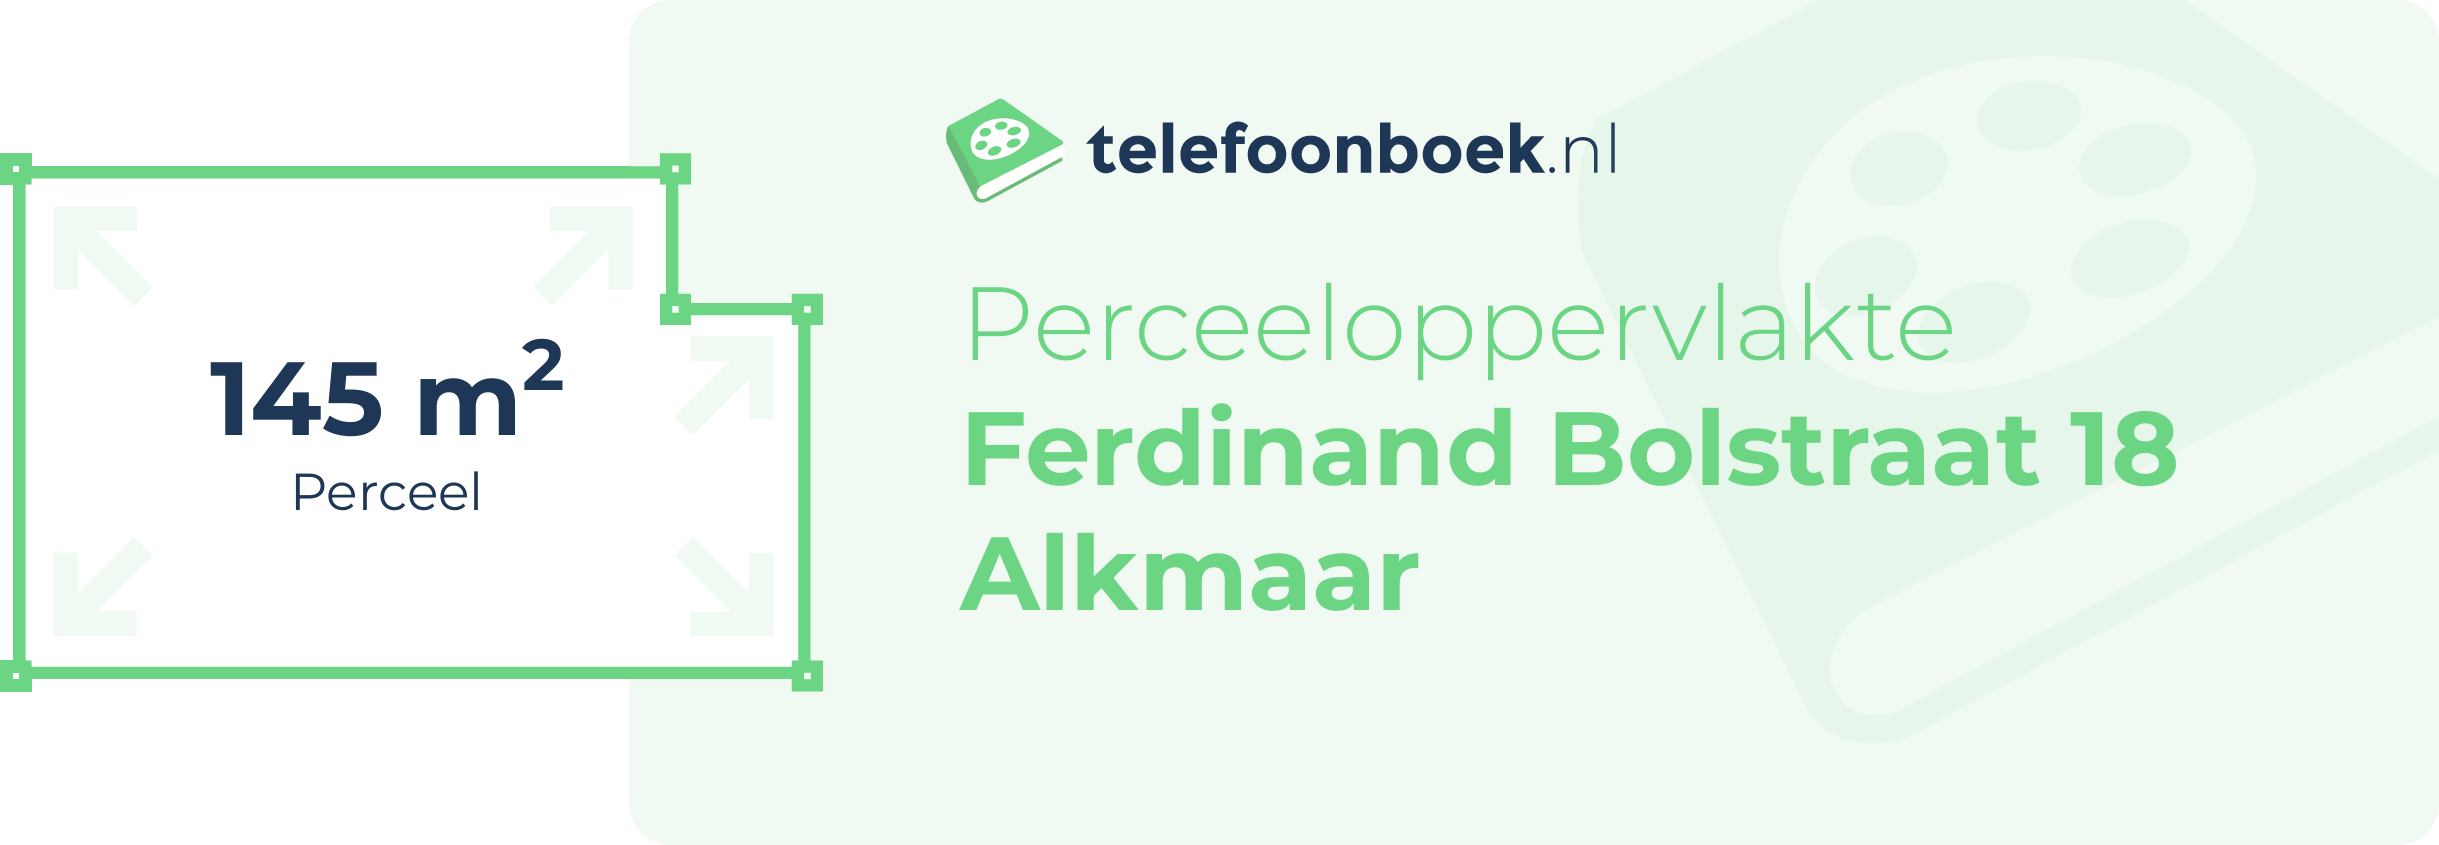 Perceeloppervlakte Ferdinand Bolstraat 18 Alkmaar